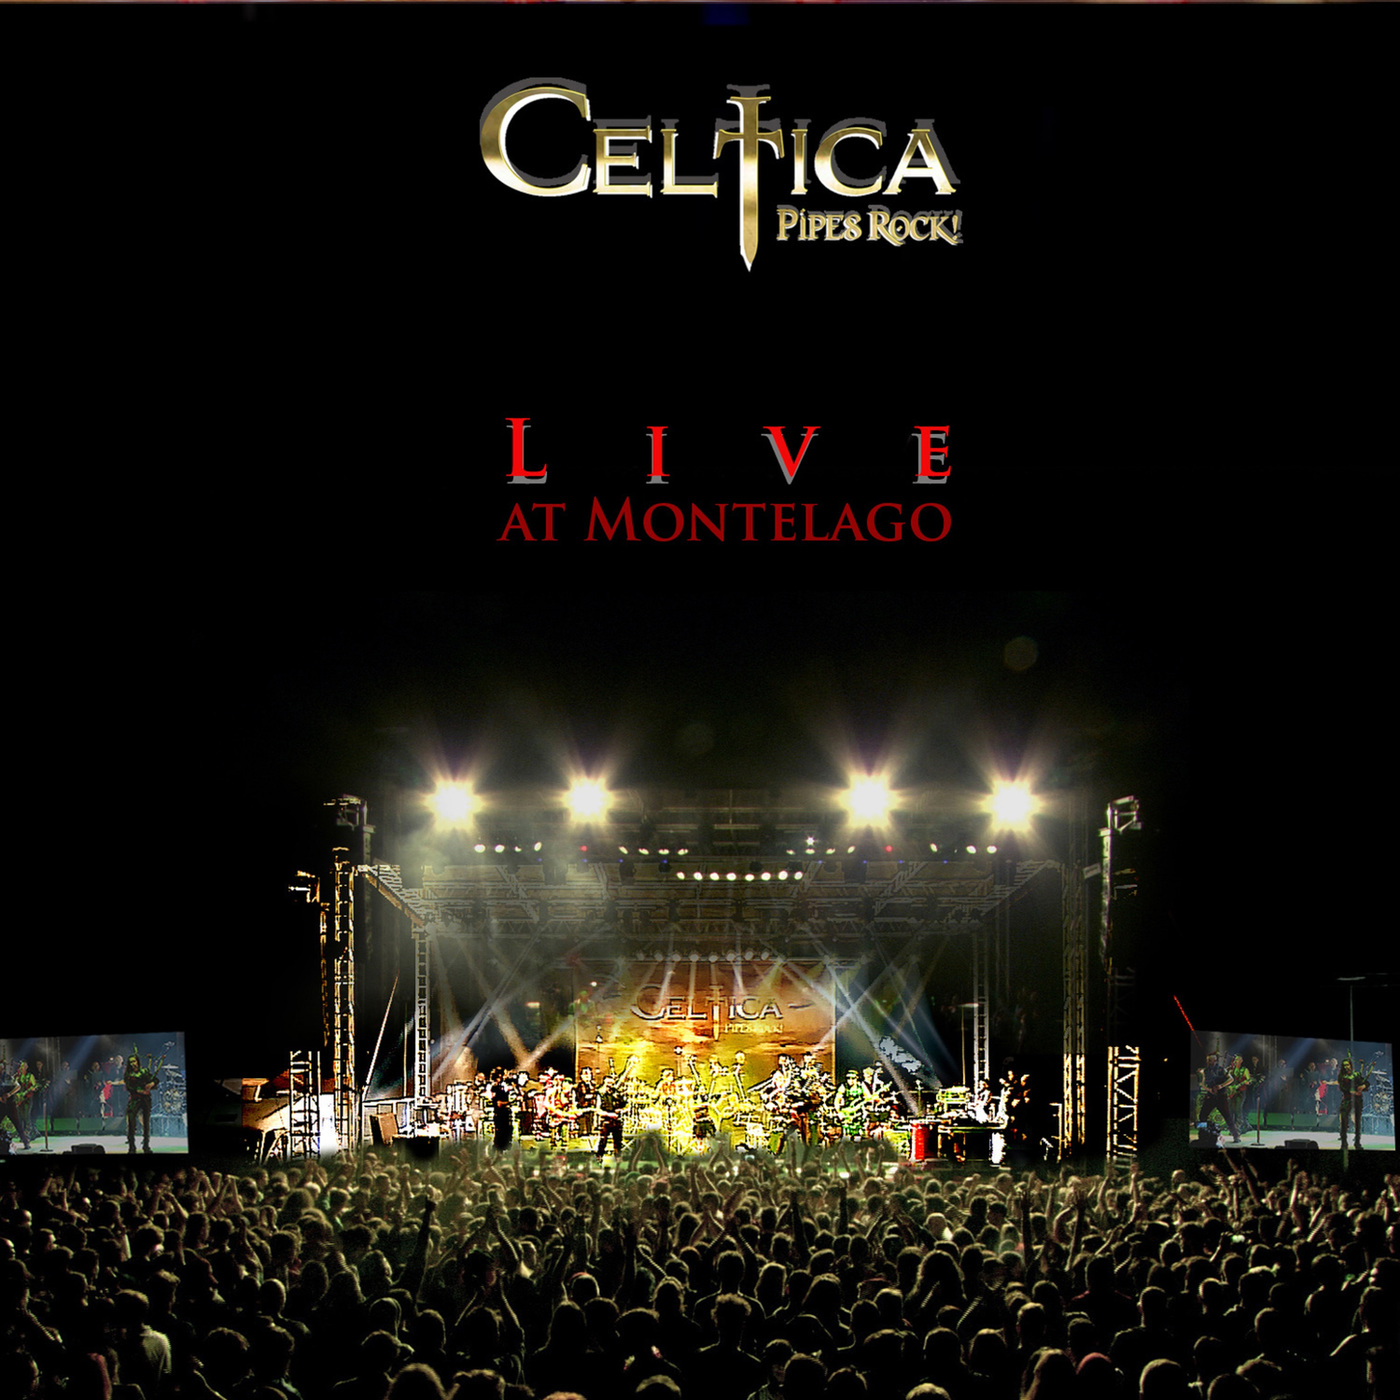 Celtica - 2018 - Pipes Rock! (Live at Montelago)